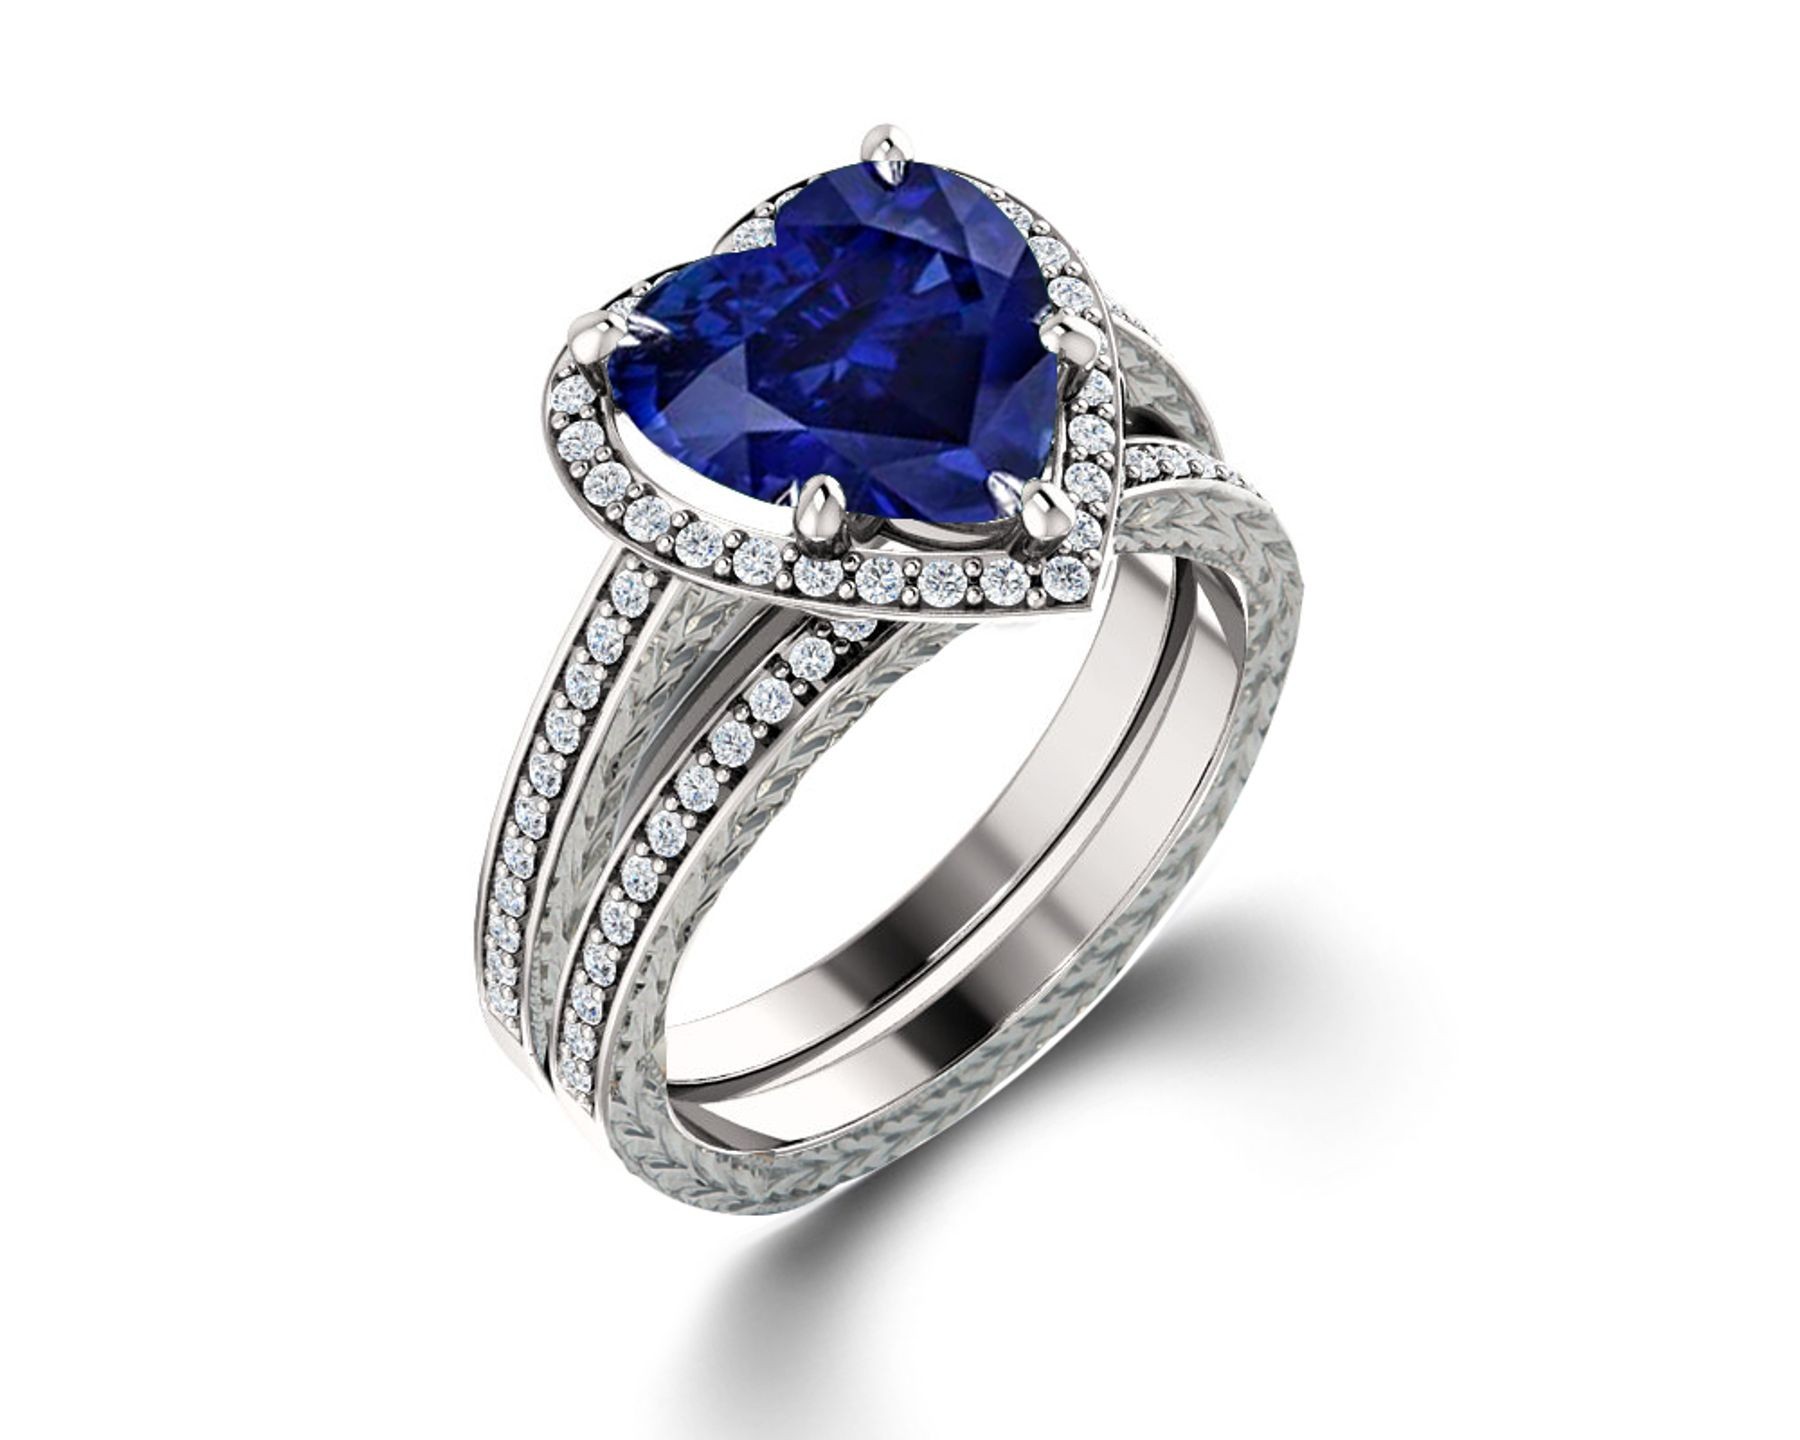 Delicate Micro Pave Halo Vivid Blue Sapphires & Brilliant-Cut Round Diamonds Designer Engagement Rings